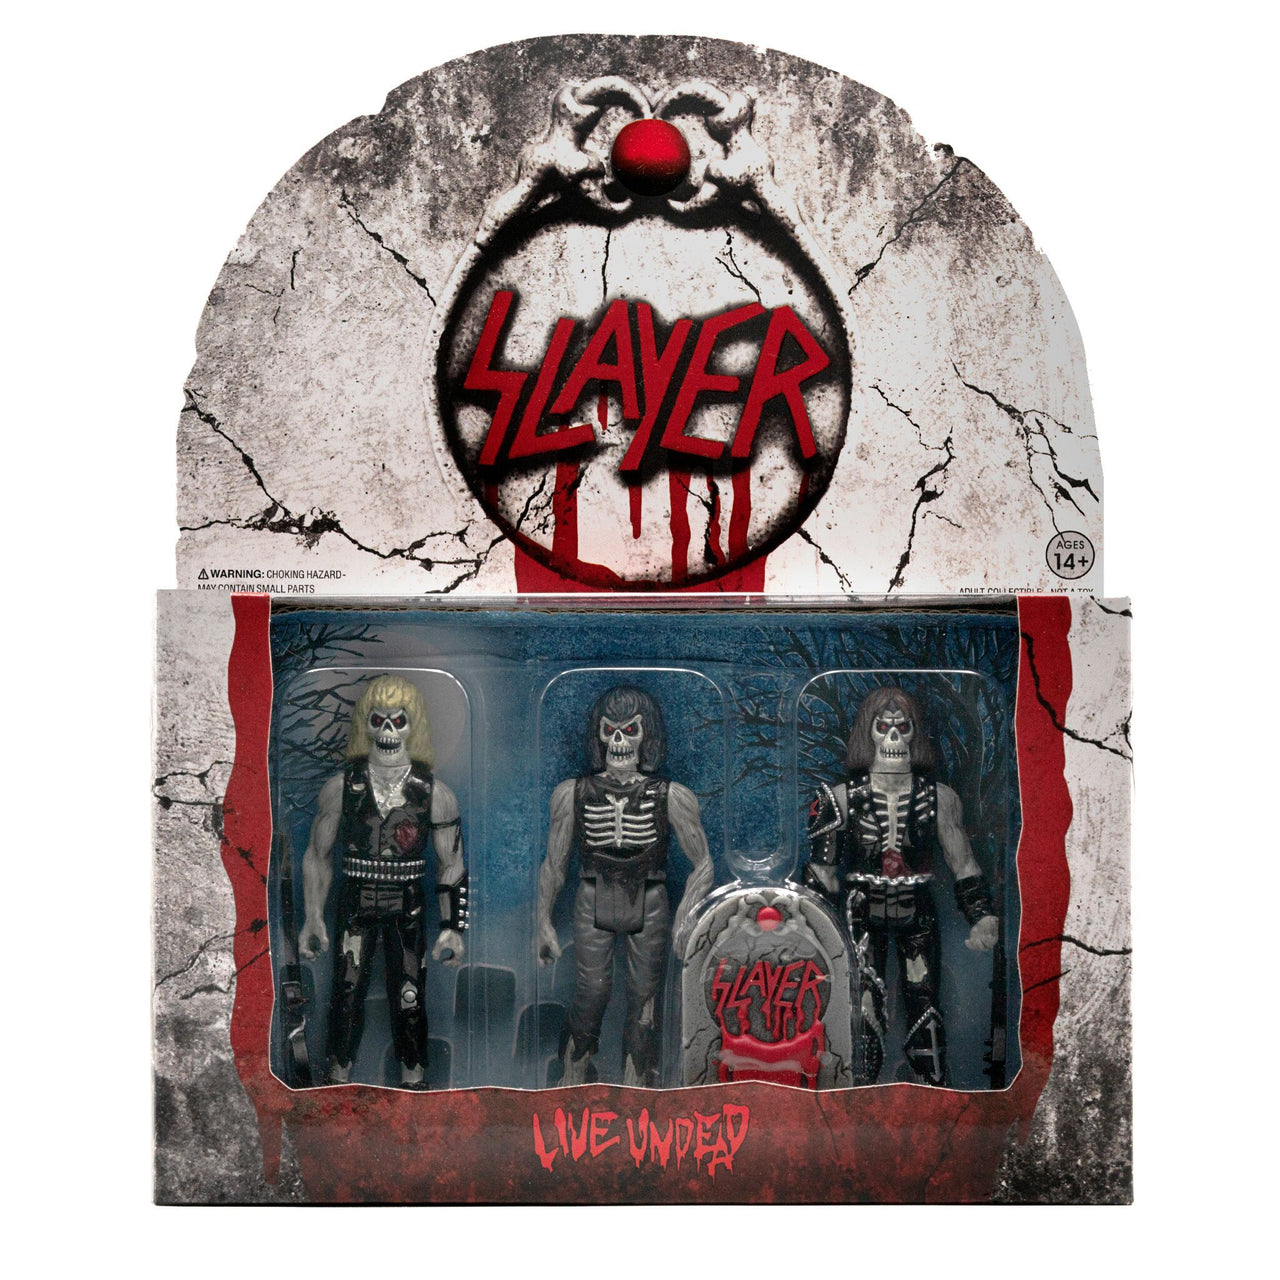 Slayer Live Undead Figurines